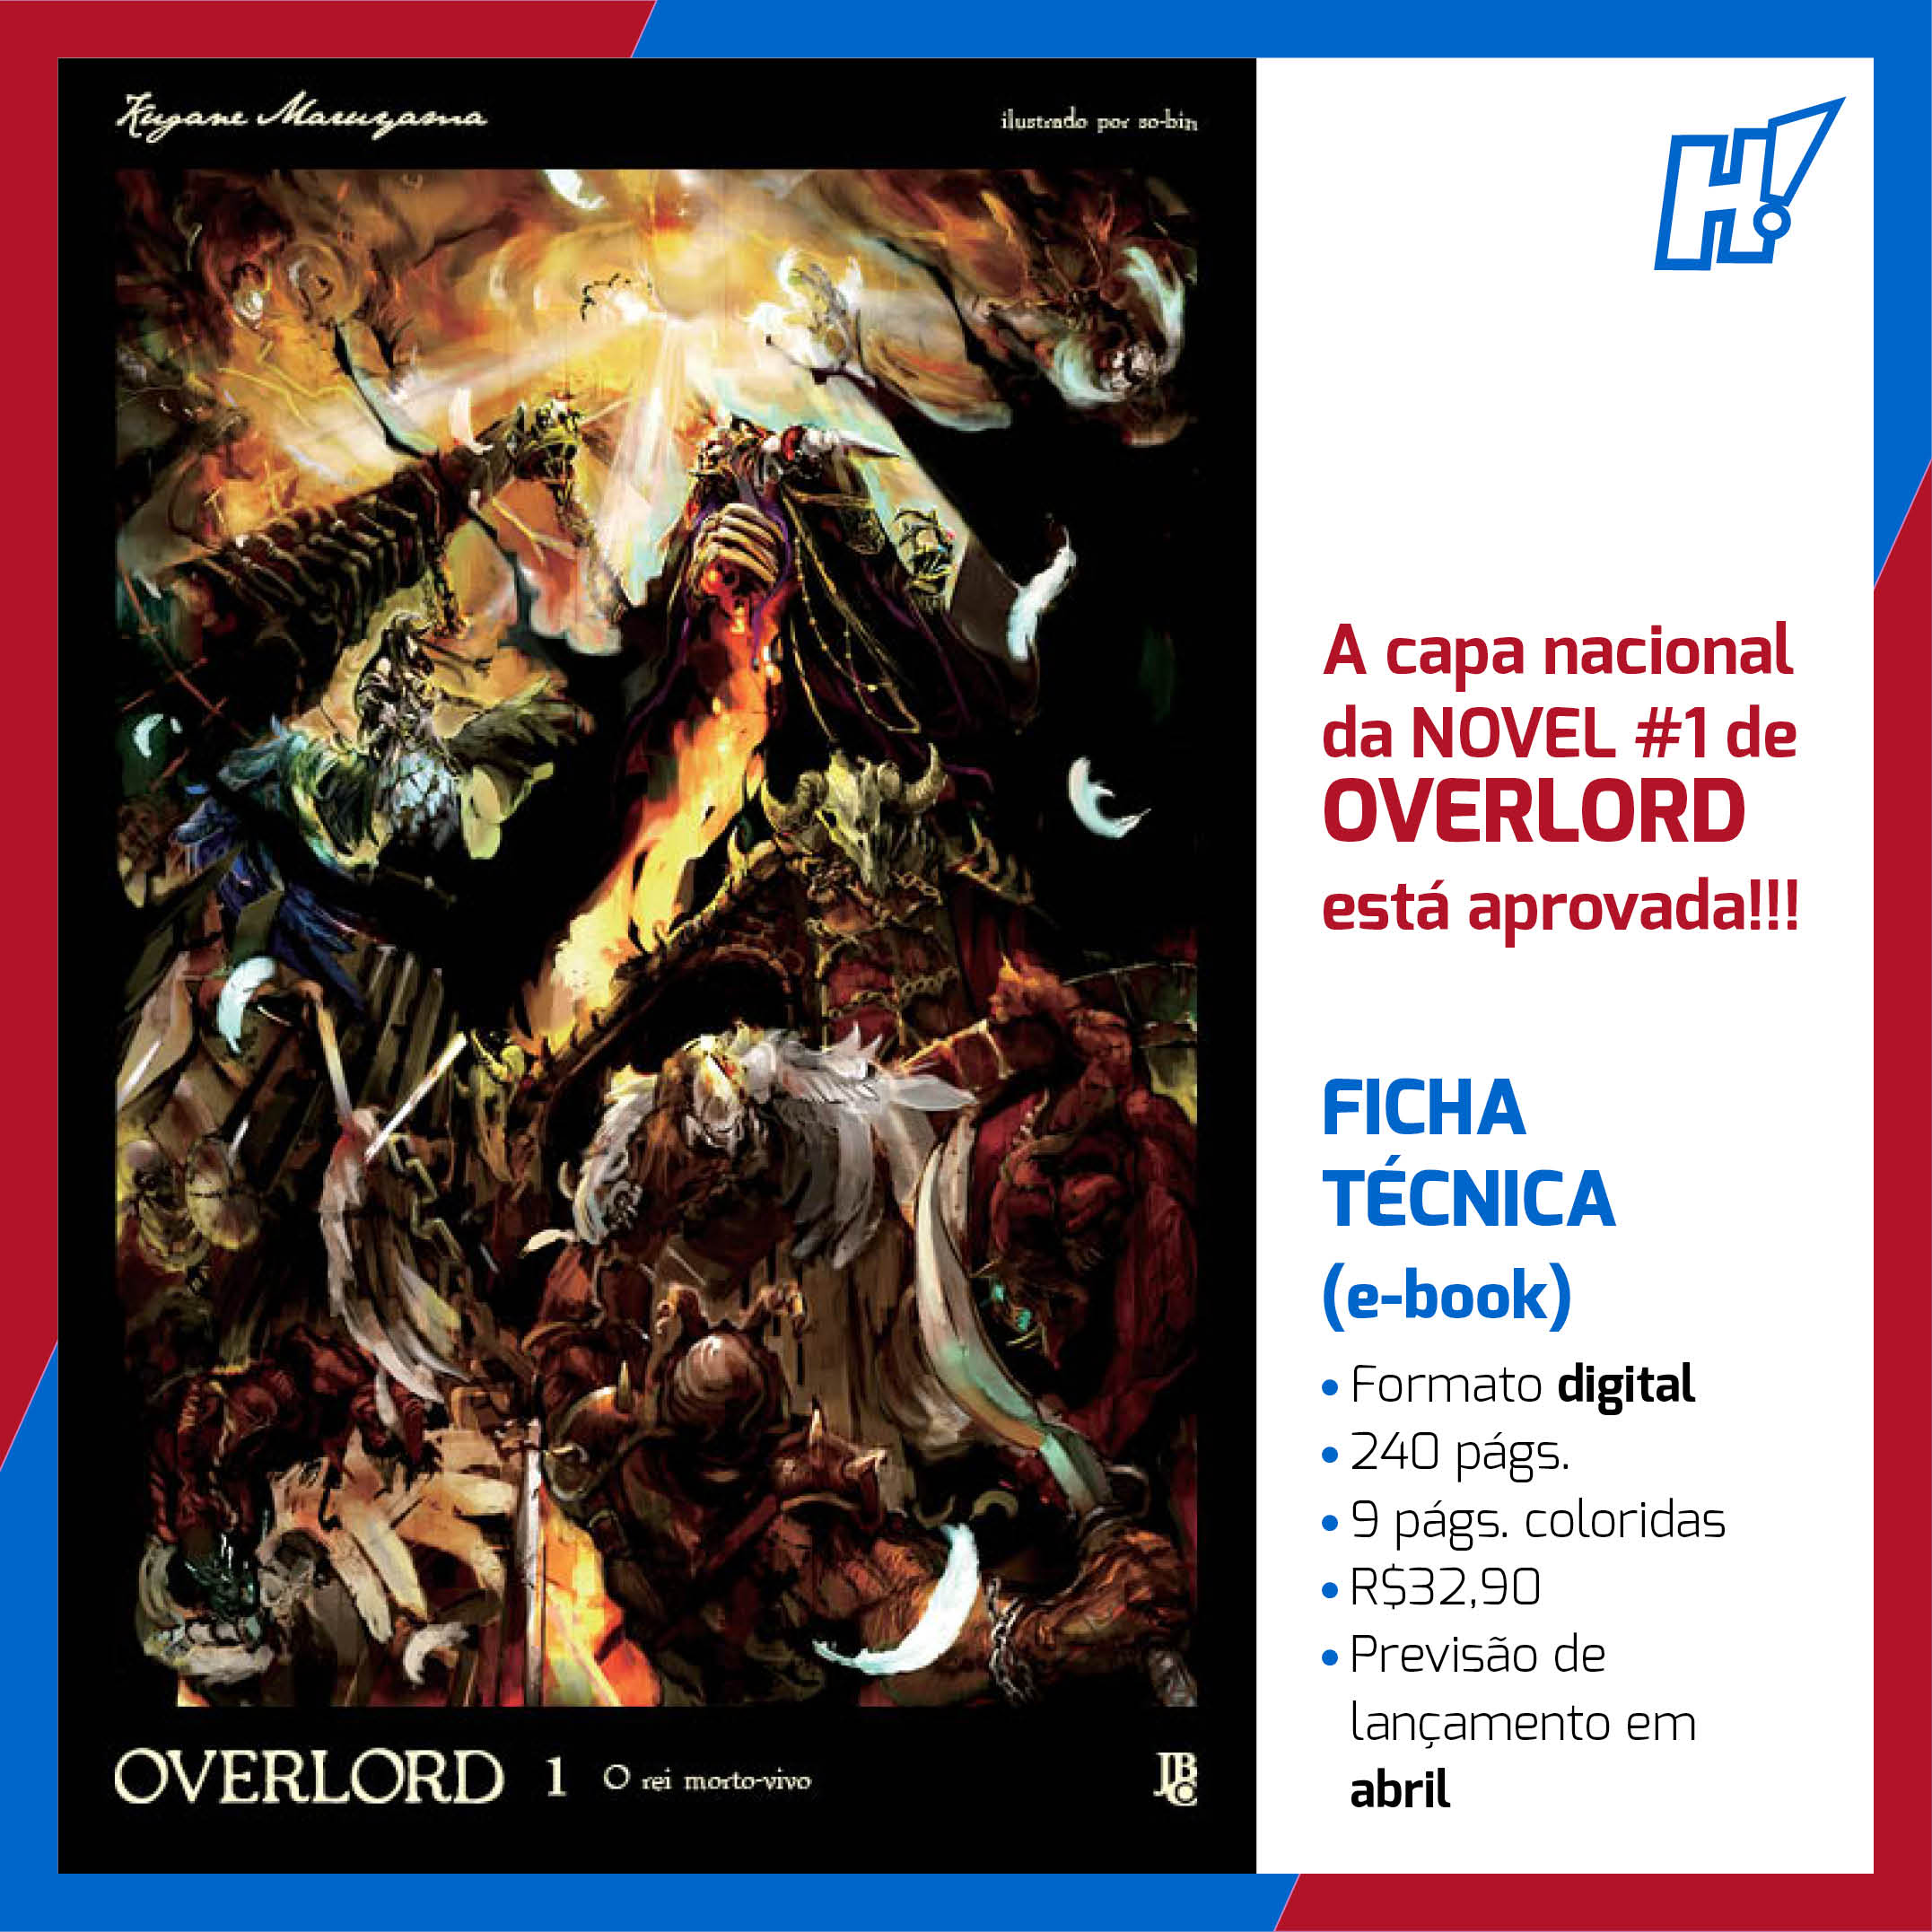 Overlord Vol. 01 (livro) - O Rei Morto-vivo